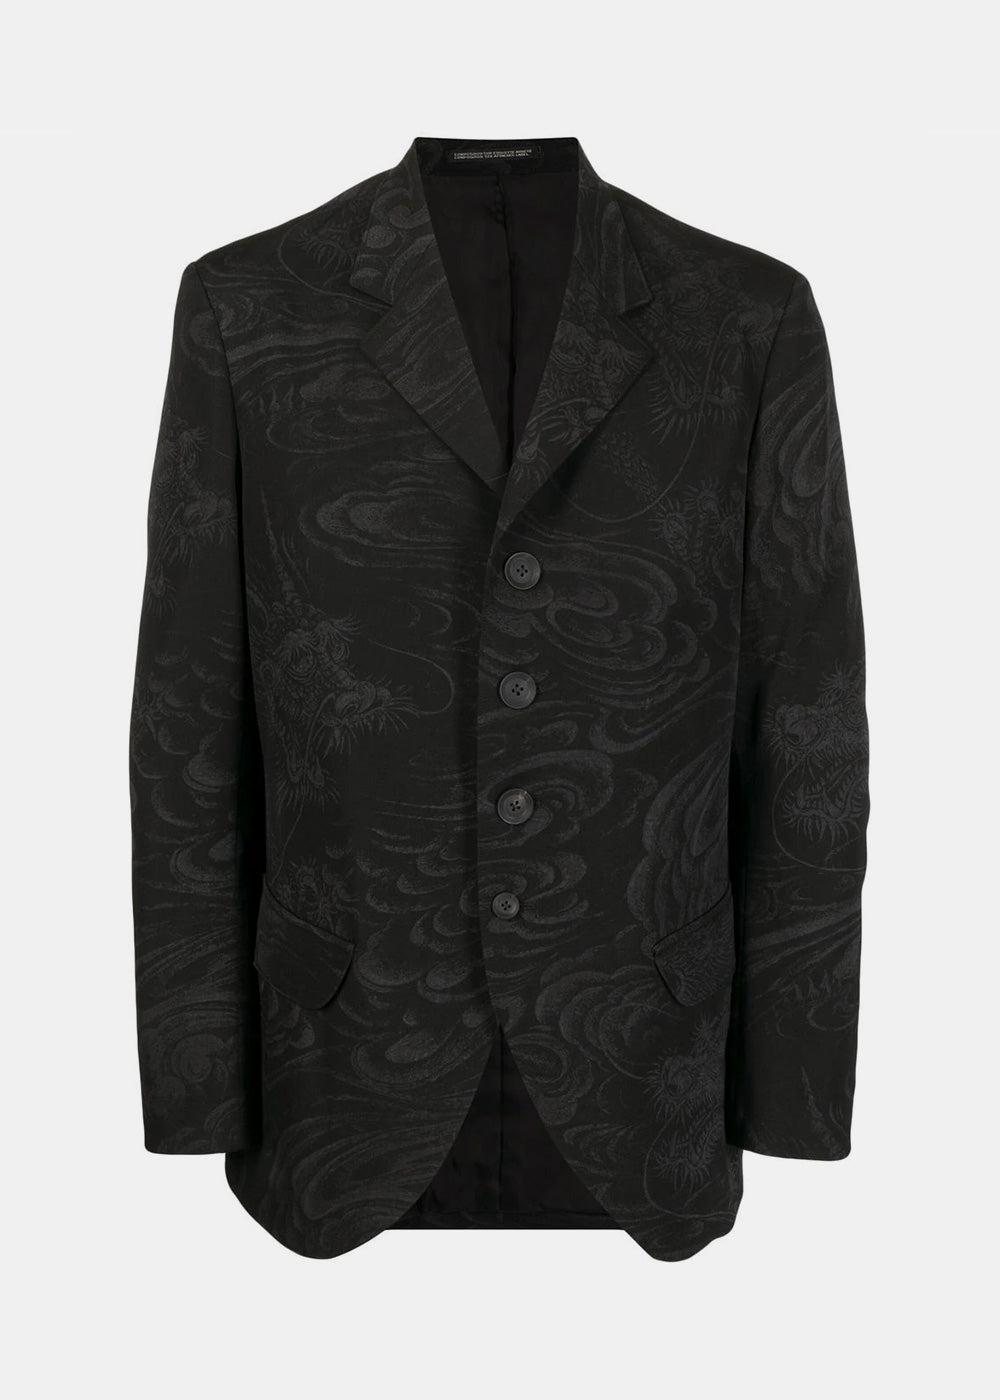 Yohji Yamamoto Dragon Print Discharge Jacket in Black for Men | Lyst